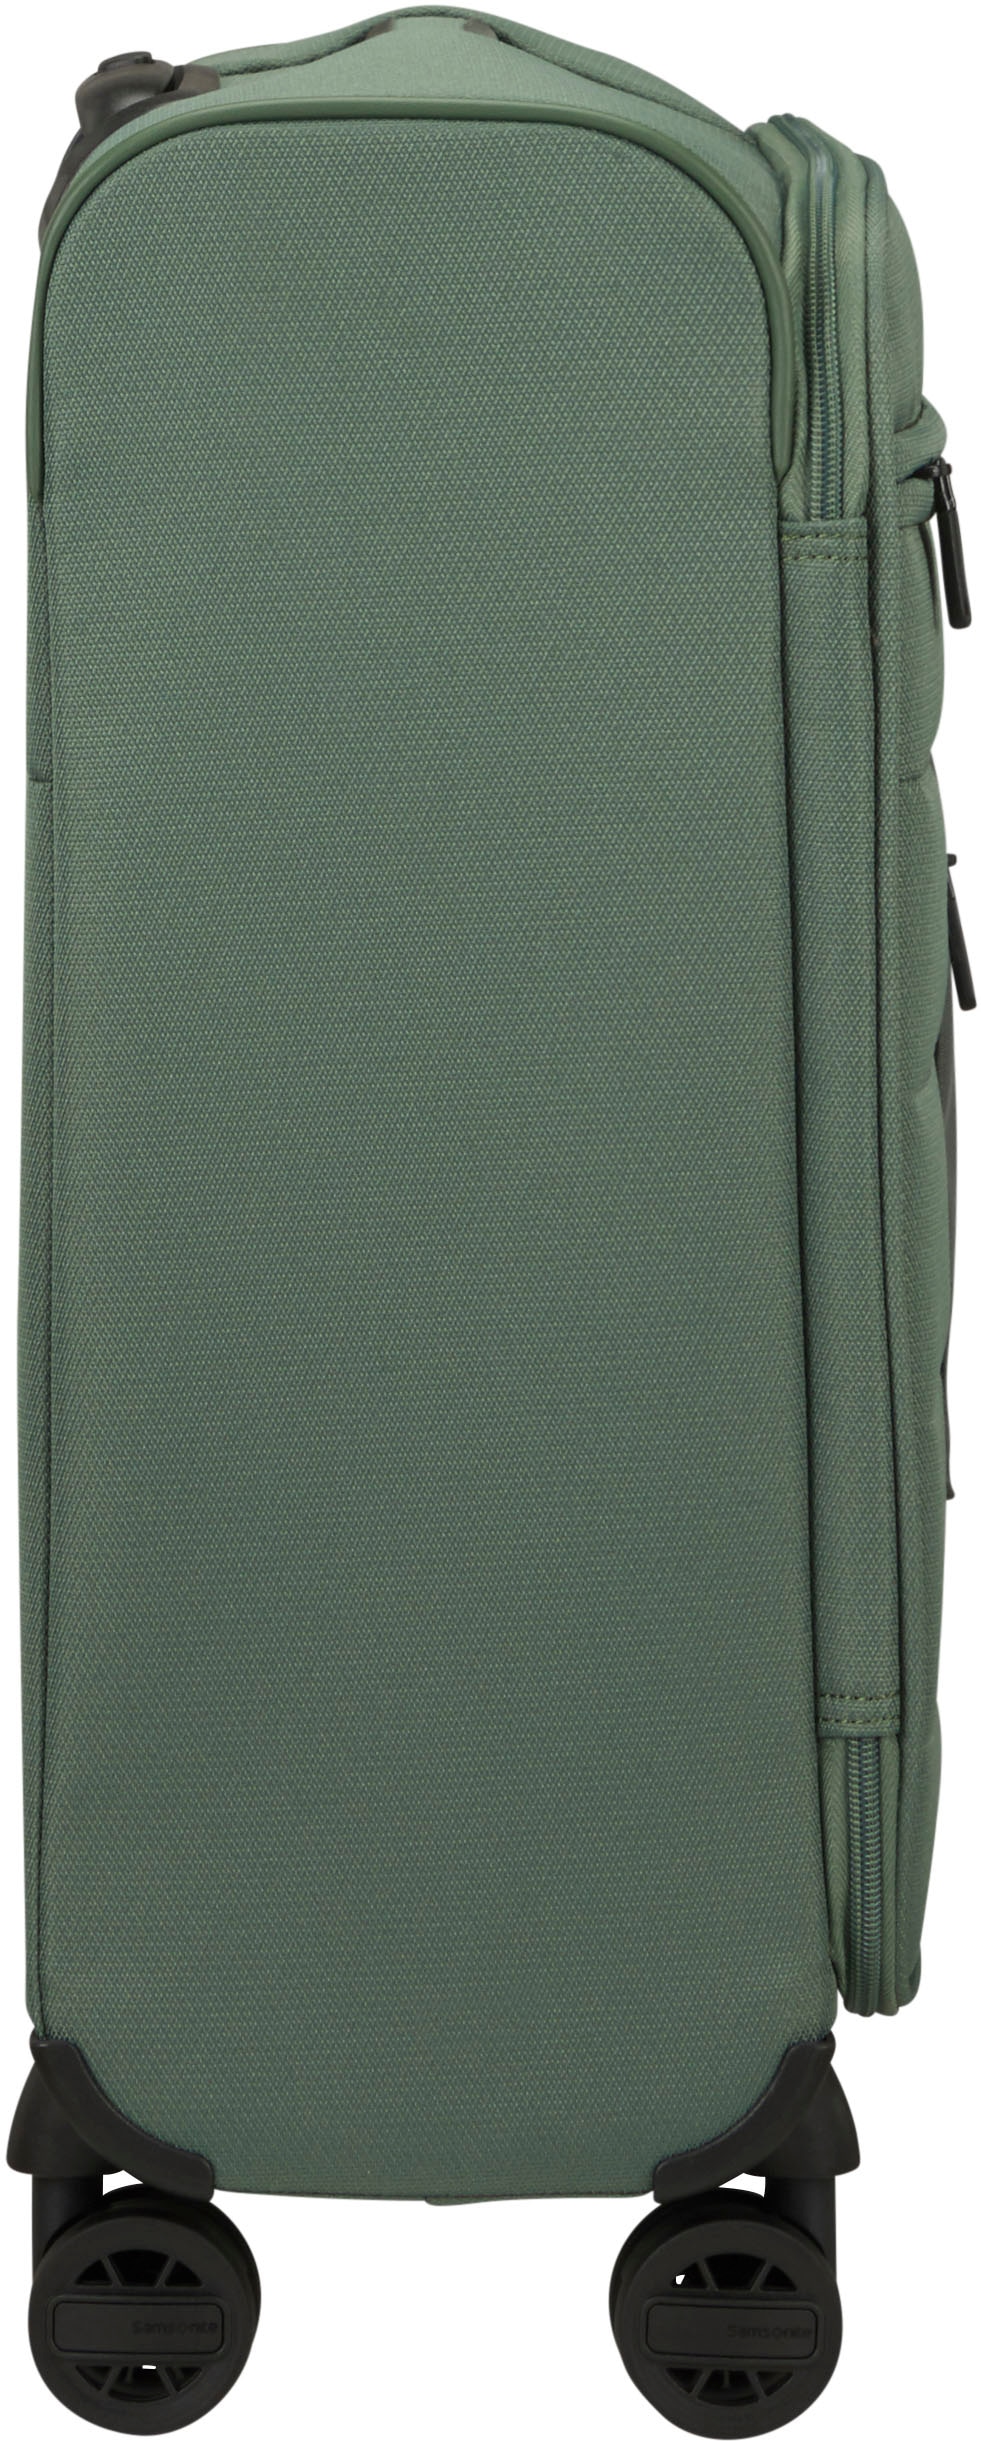 Samsonite Weichgepäck-Trolley »Vacay, pistachio green, 55 cm«, 4 Rollen, Handgepäck-Koffer Reisegepäck Reisekoffer TSA-Zahlenschloss